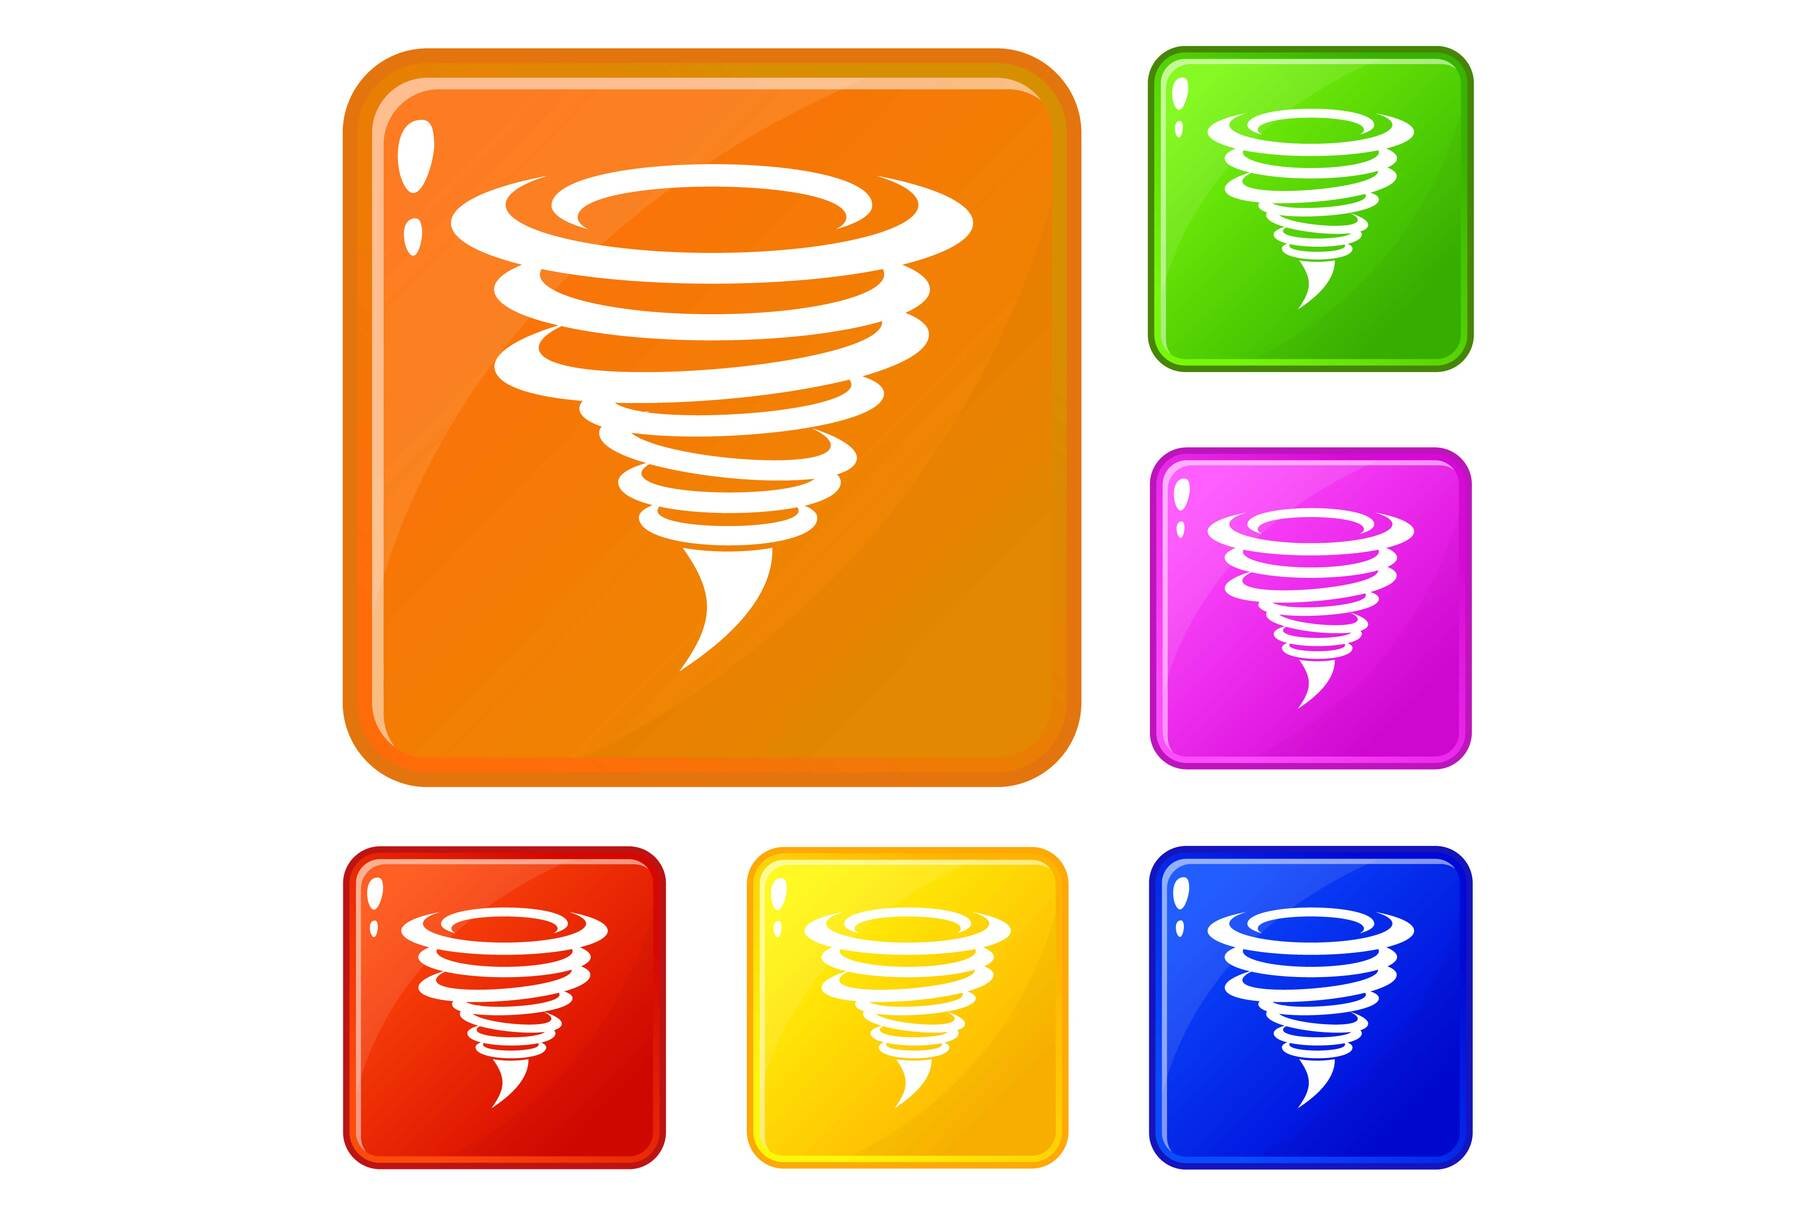 Tornado icons set vector color cover image.